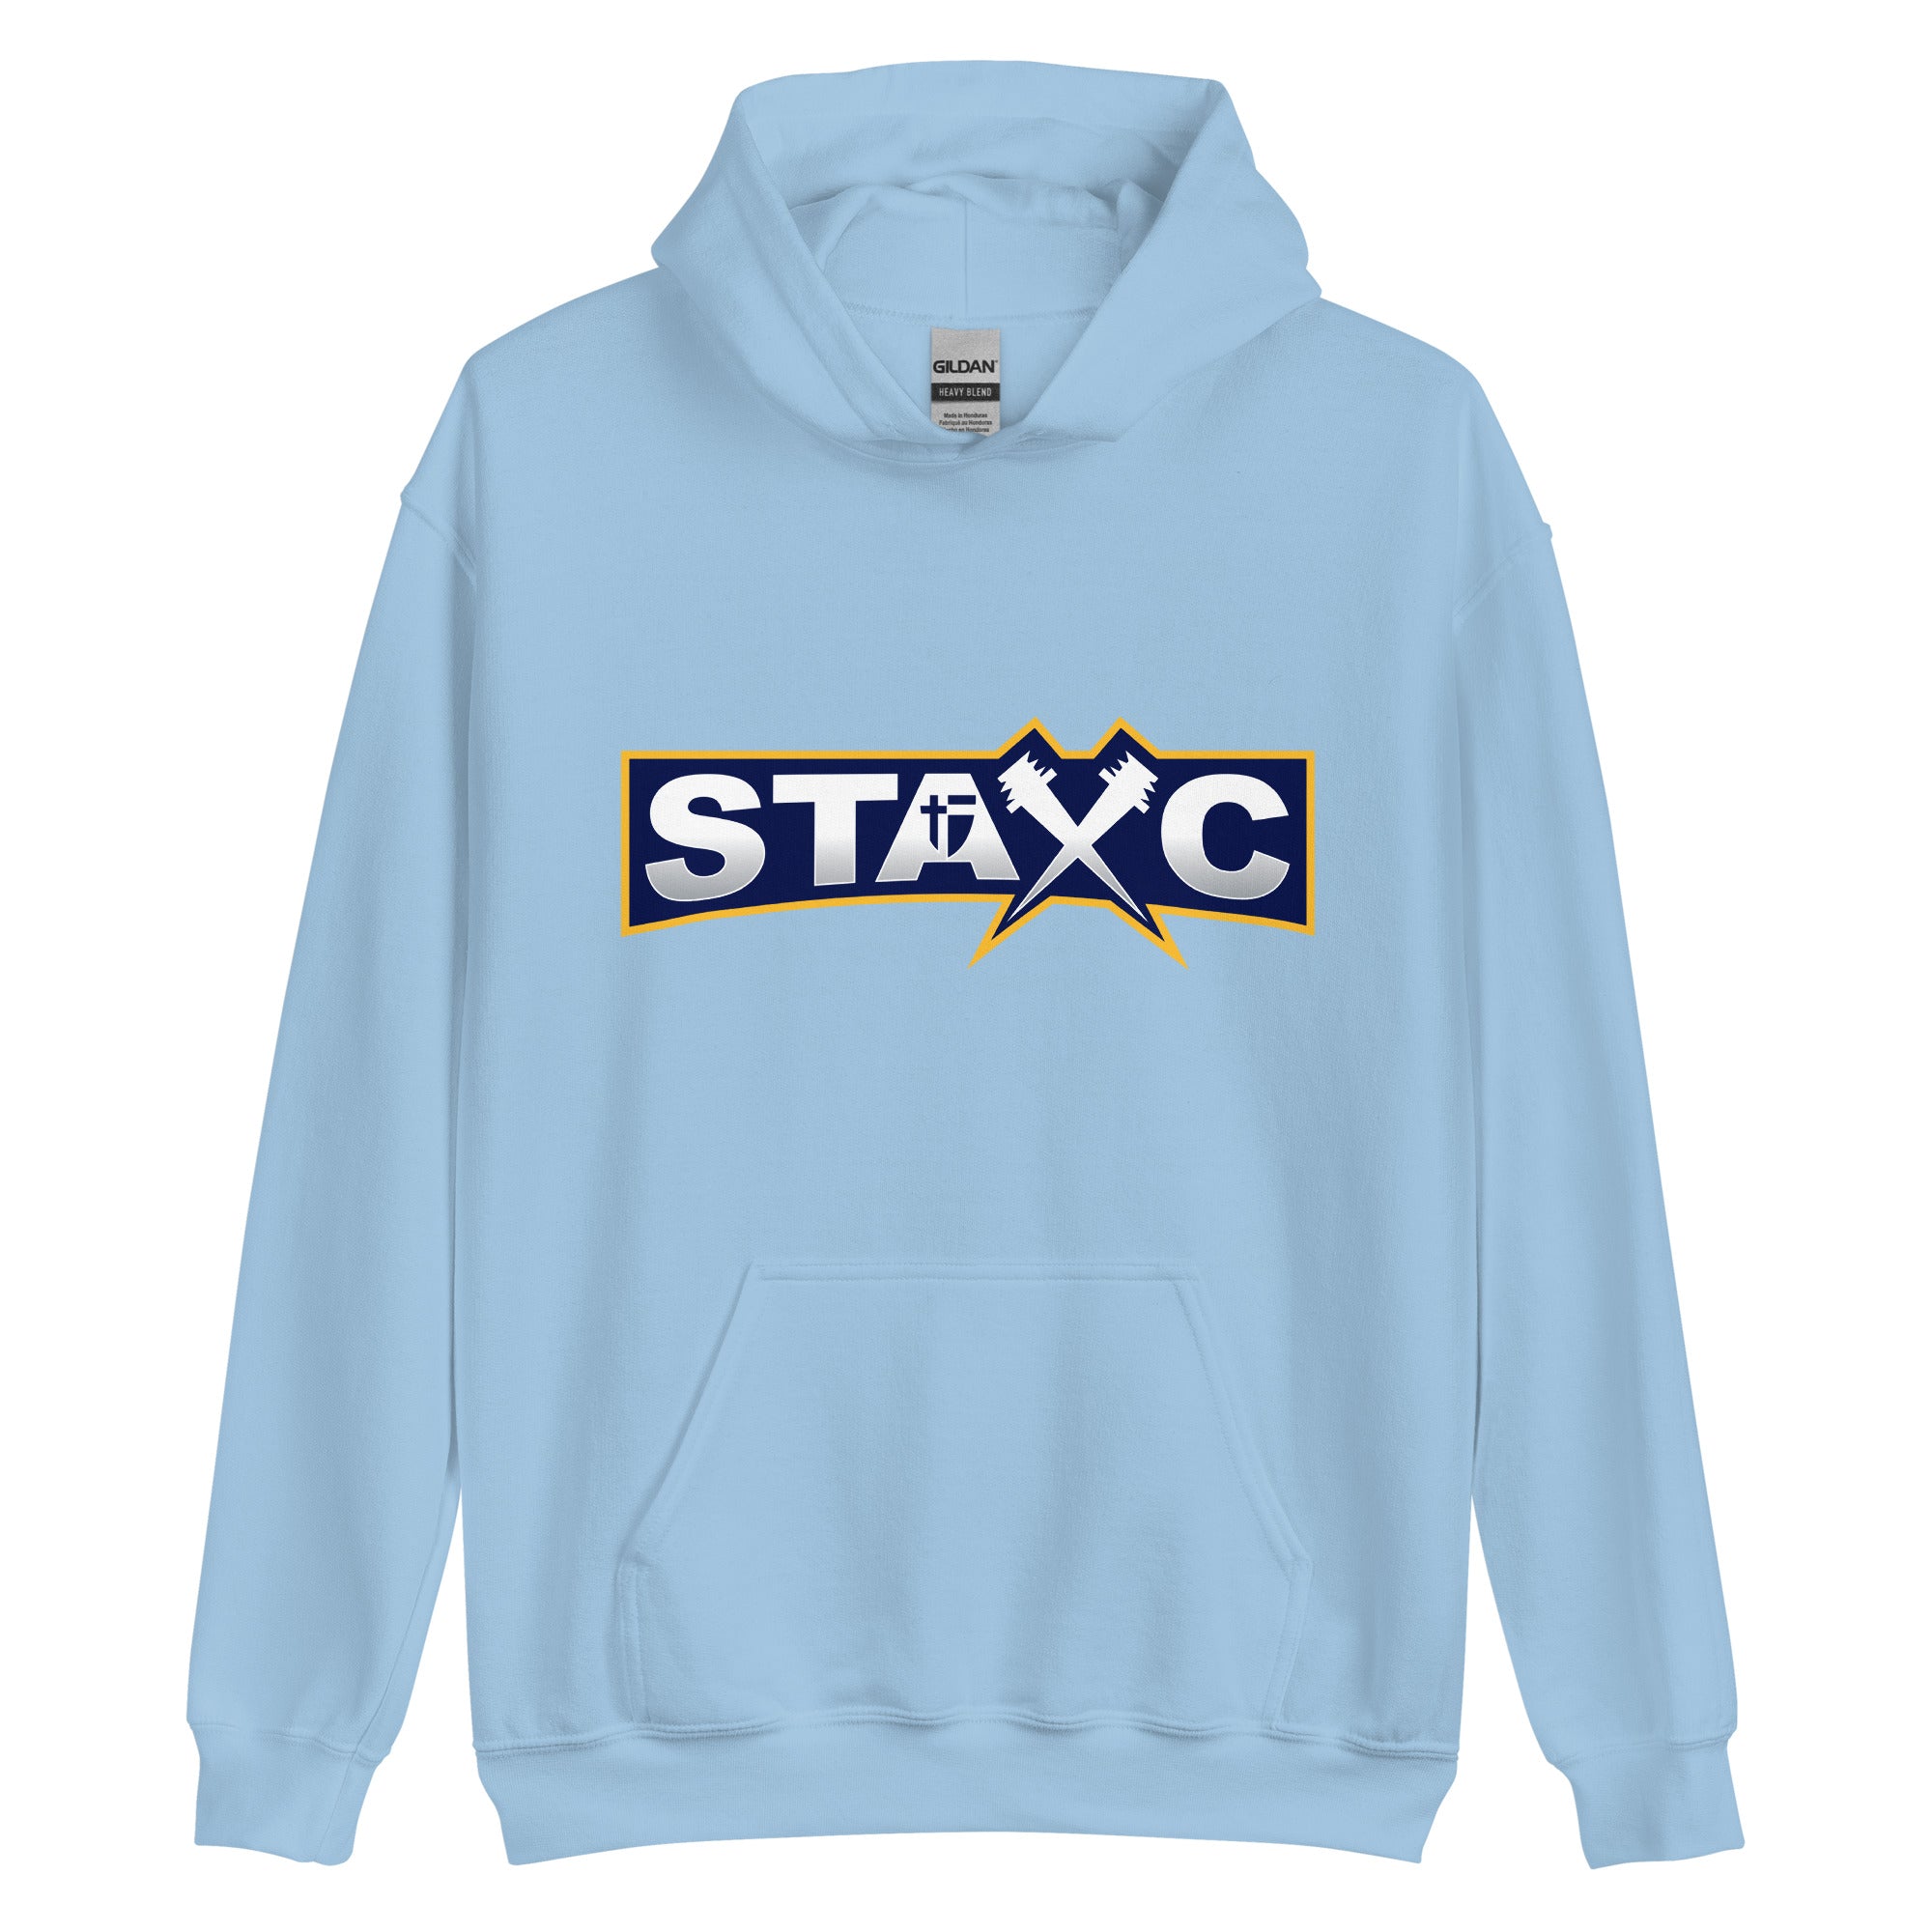 STAXC (Light Blue Version) Unisex Hoodie